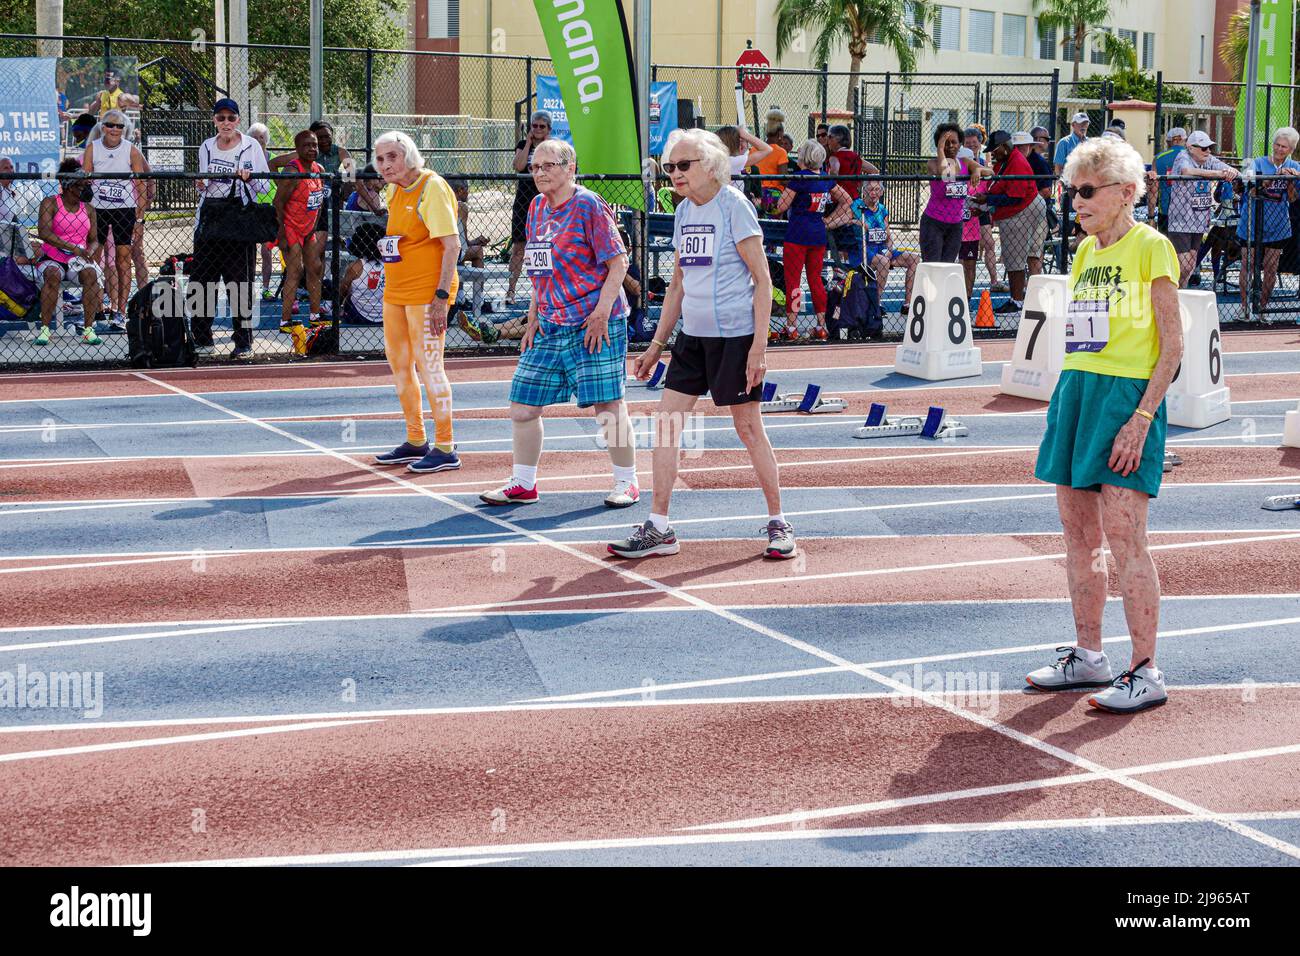 Fort Ft. Lauderdale Florida, Ansin Sports Complex Track & Field National Senior Games, mujeres mayores corredores competidores mujeres hace 90 años y más,sta Foto de stock